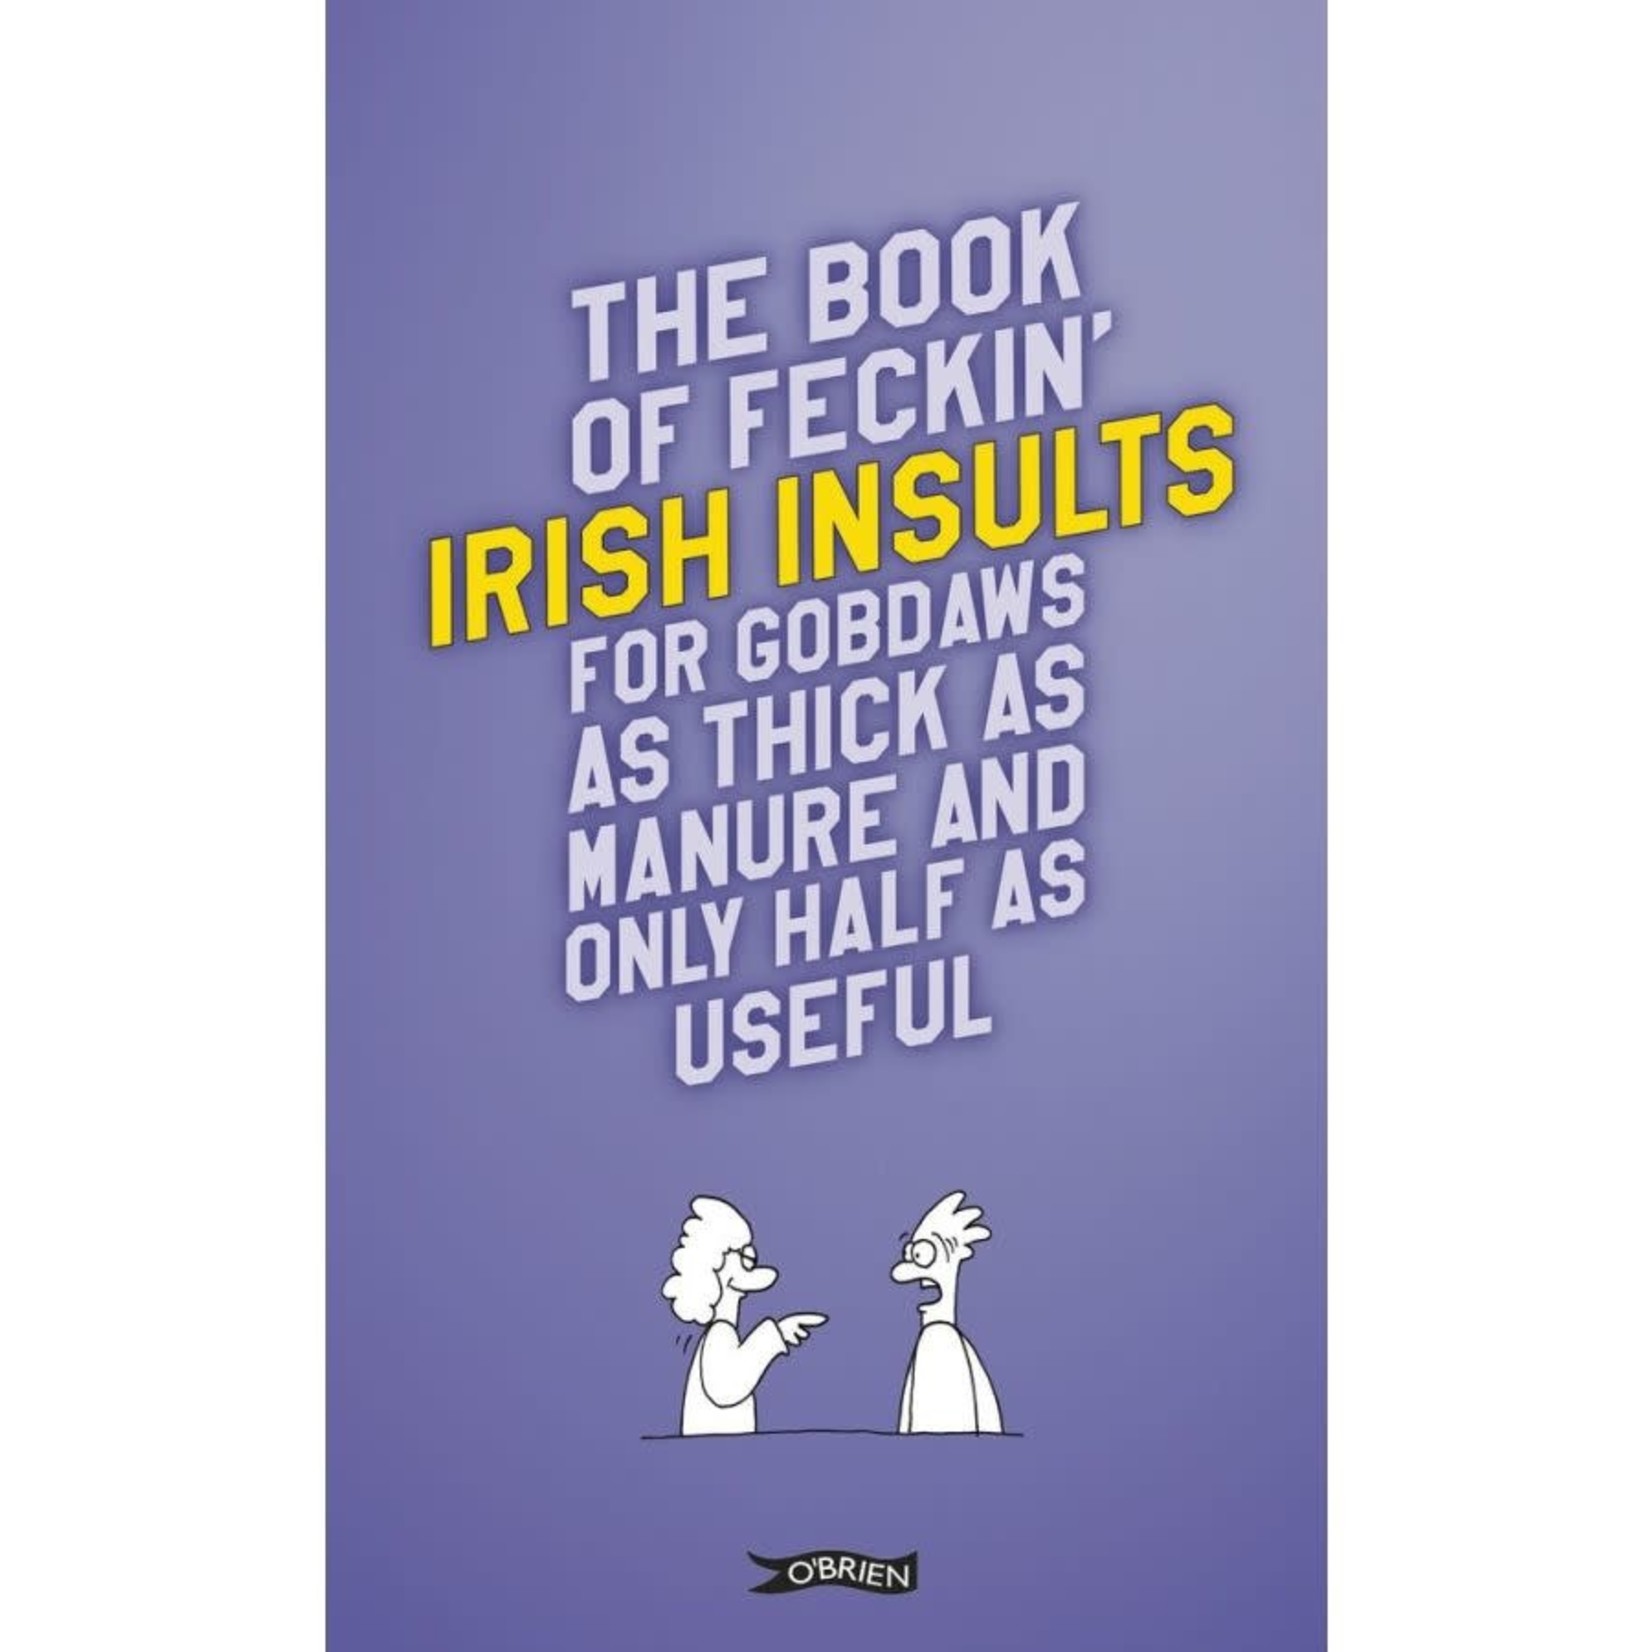 Celtic Books "The Book of Feckin' Irish Insults..."